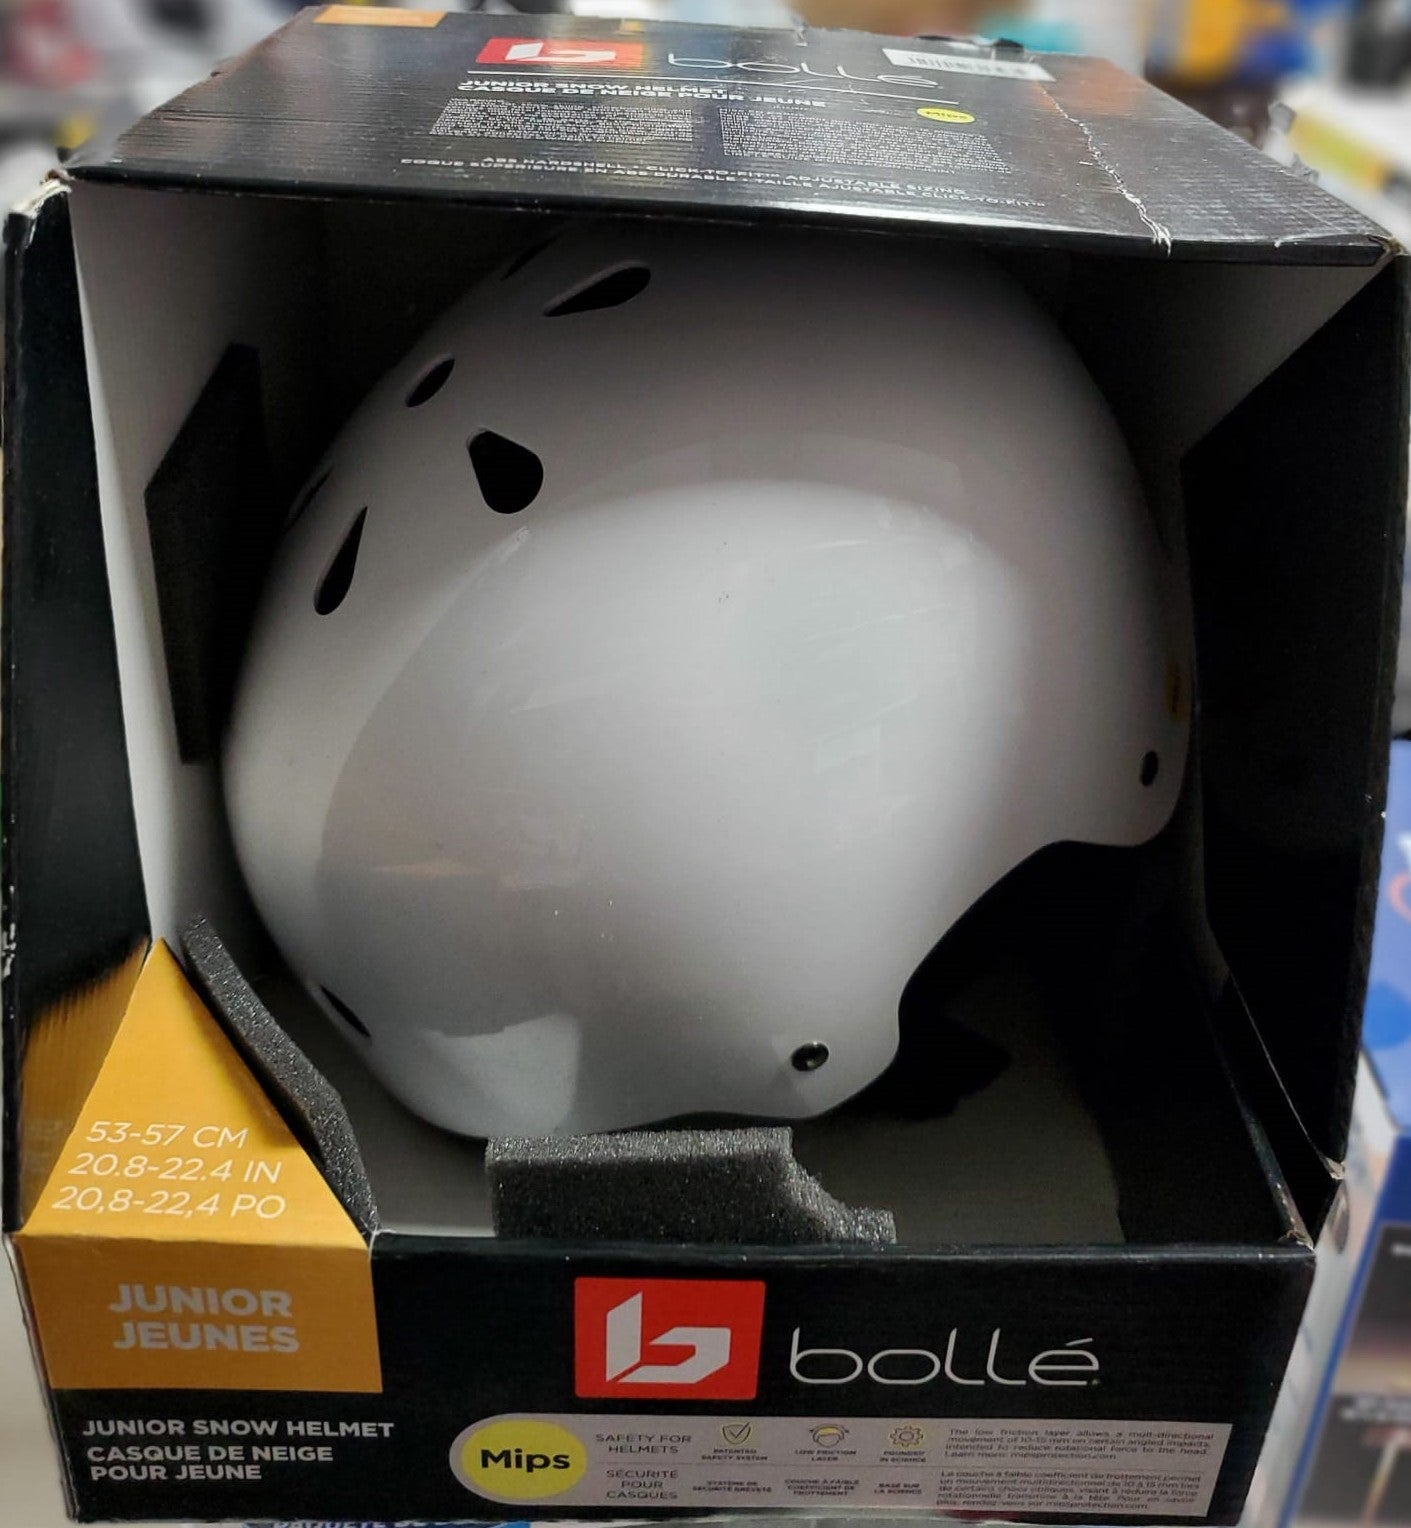 Bollé Junior Snow White Helmet featuring MIPS Technology